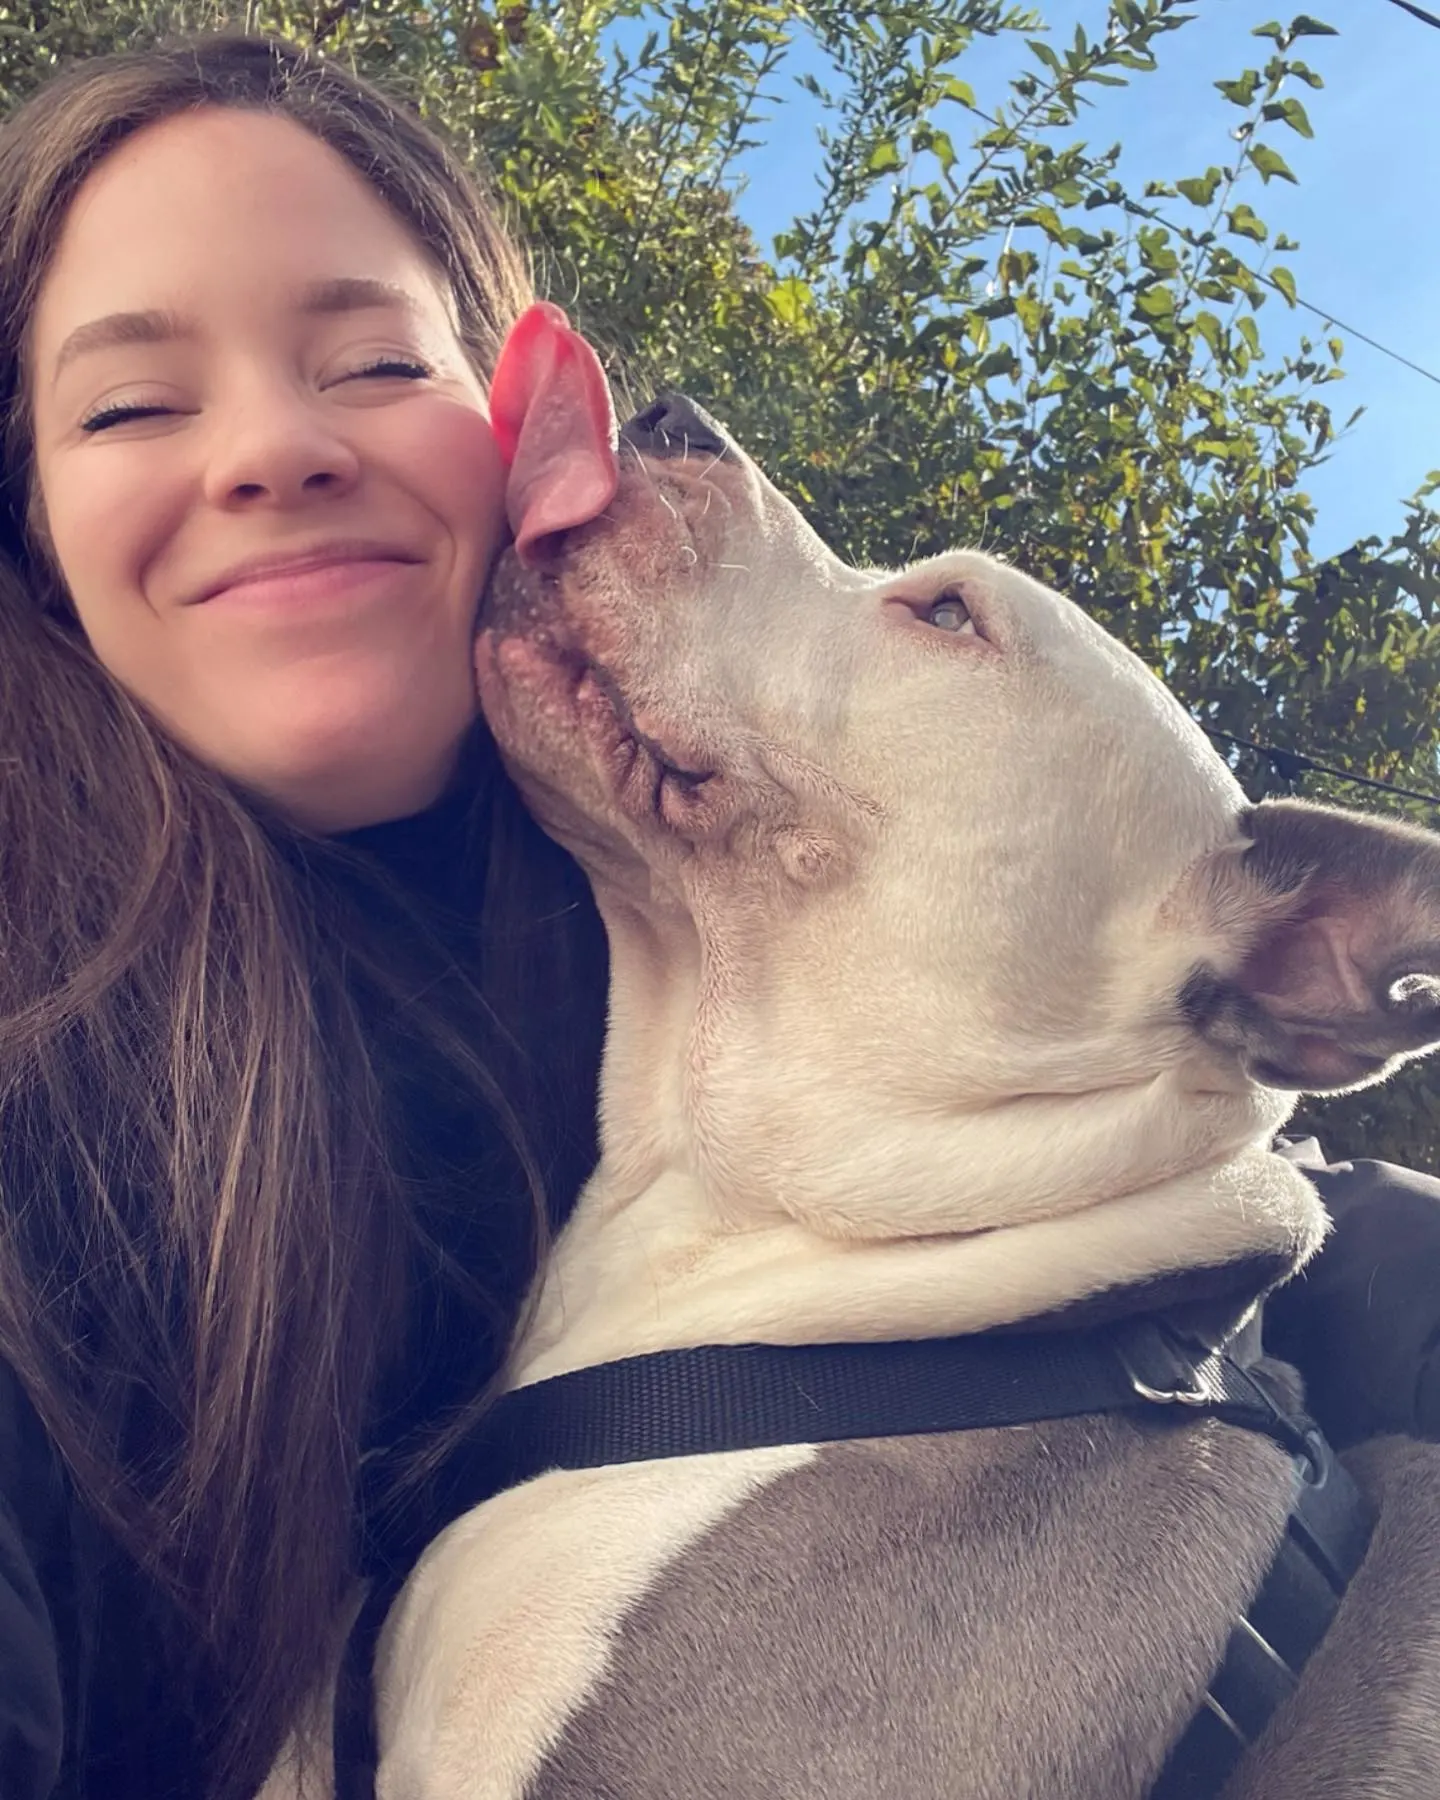 big dog licking smiling young woman